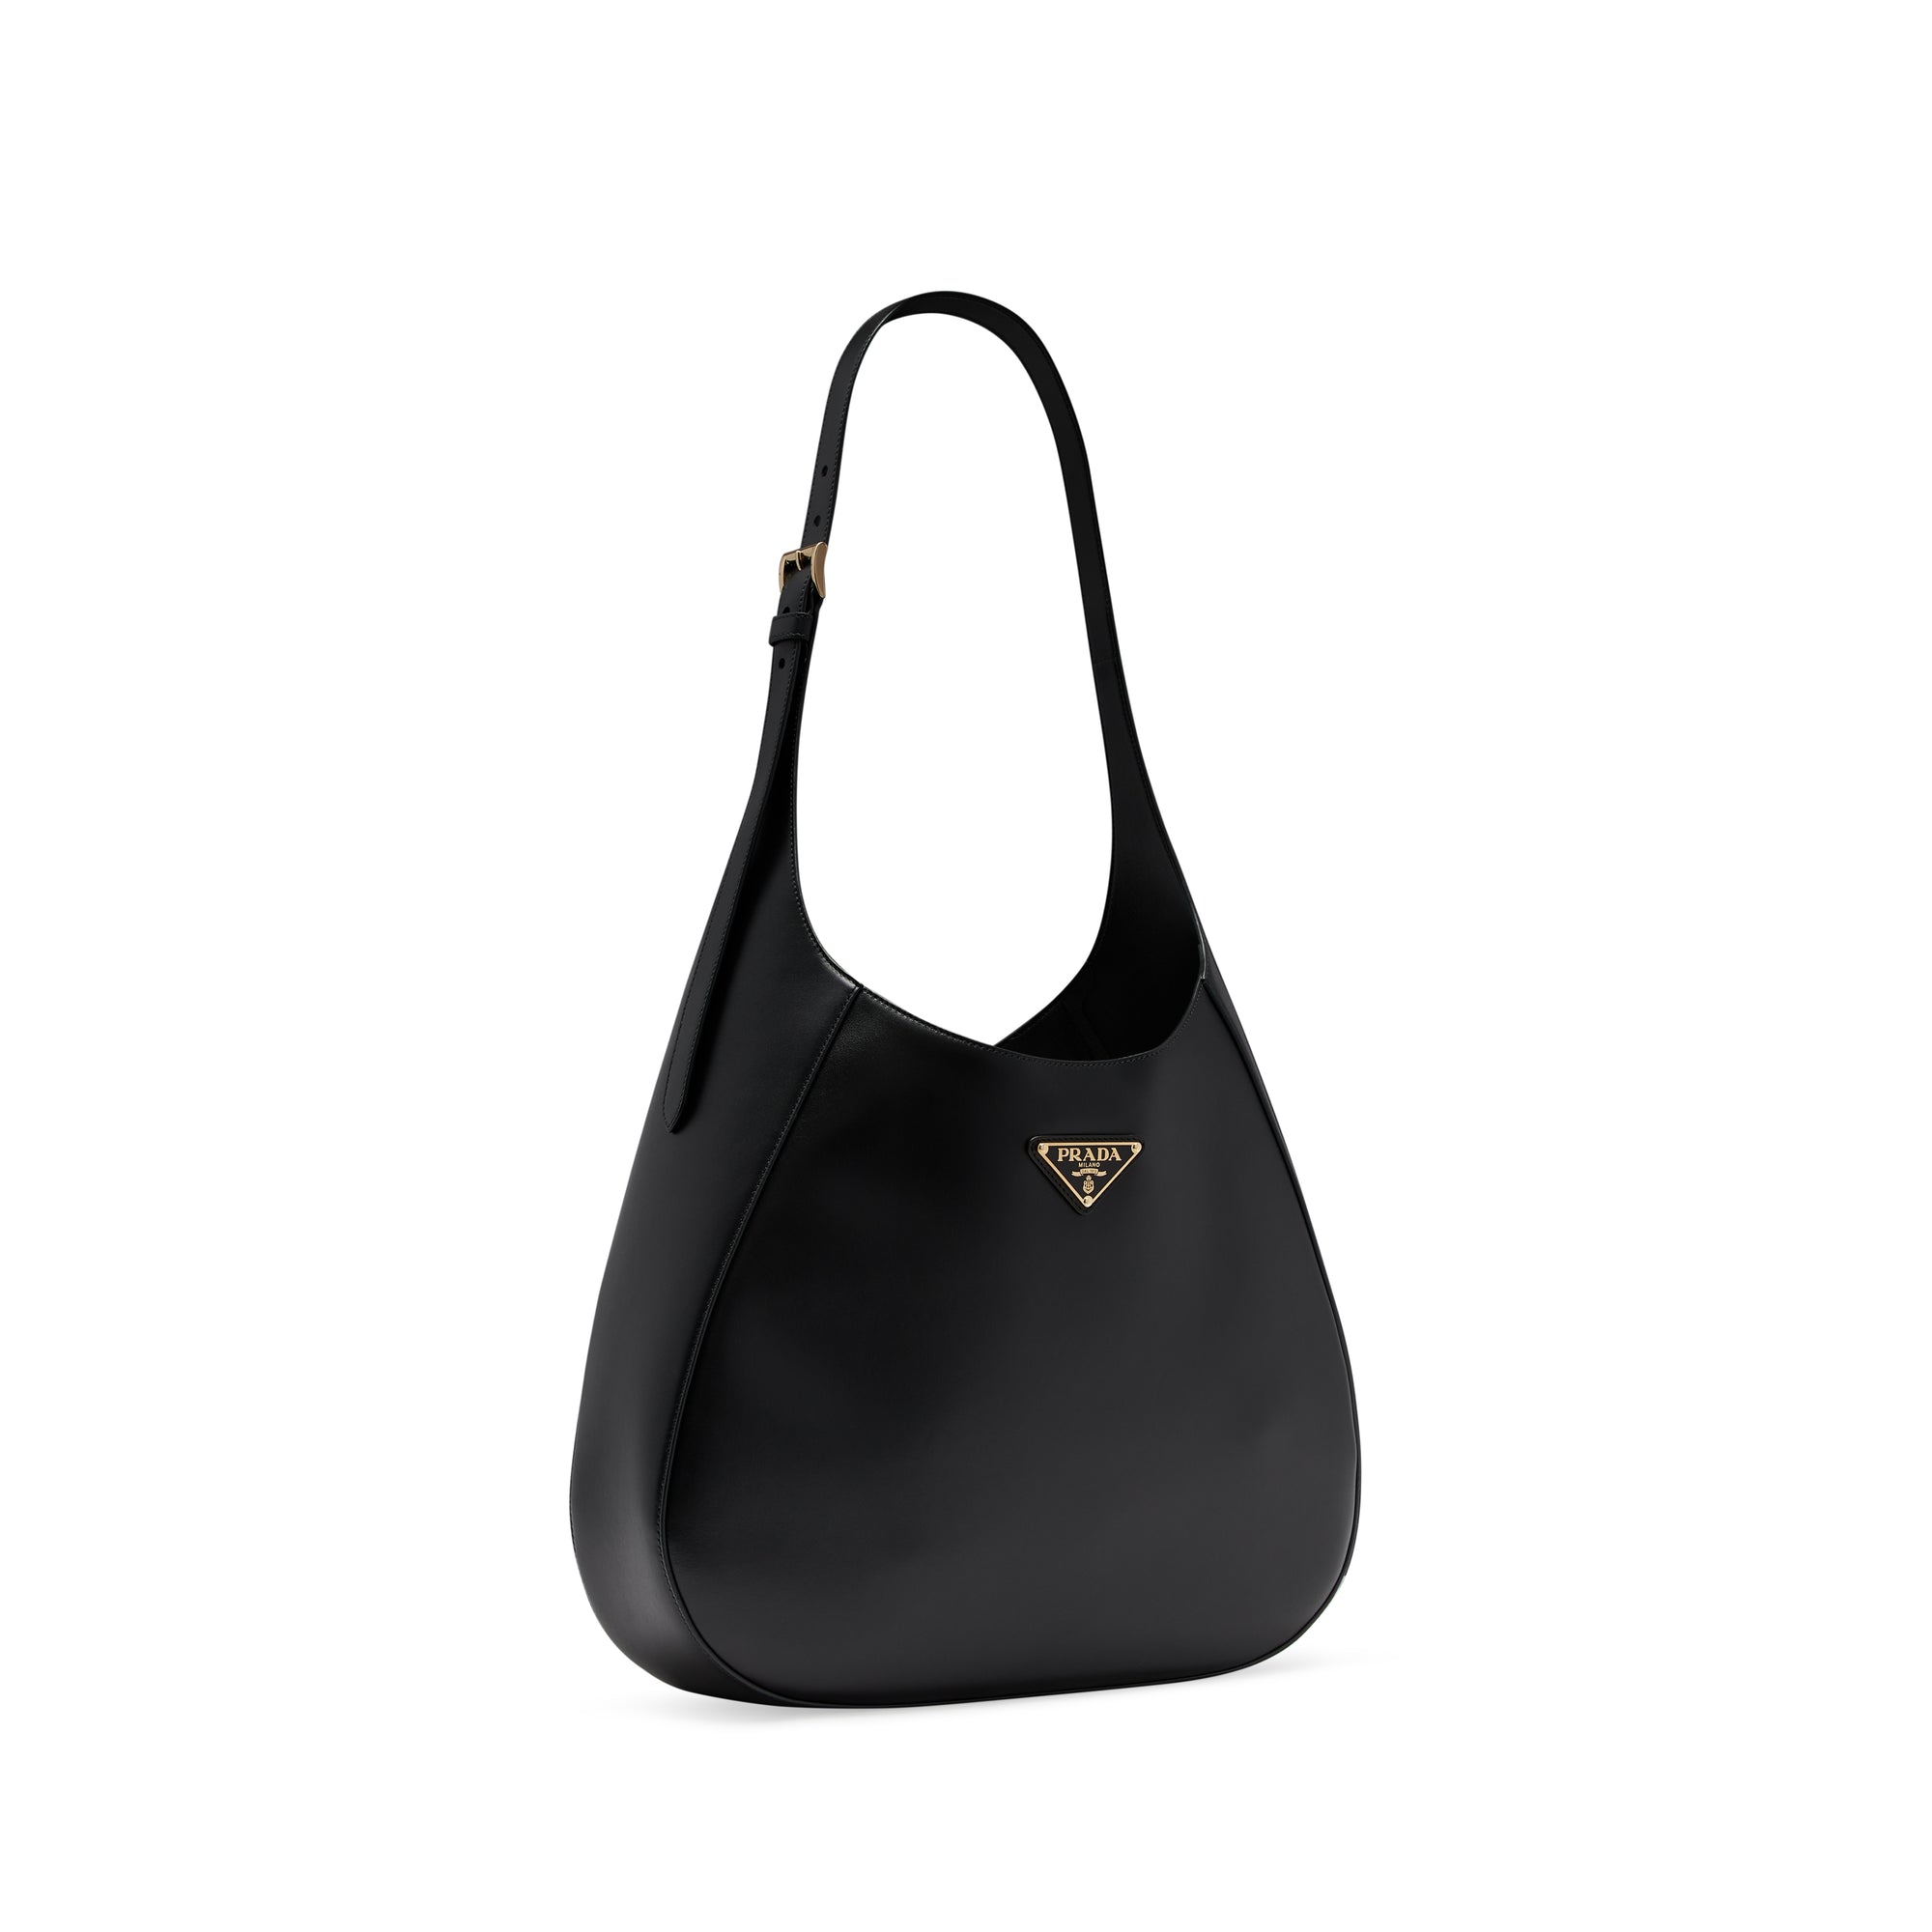 Prada - Women’s Large Leather Shoulder Bag - (Black) view 2